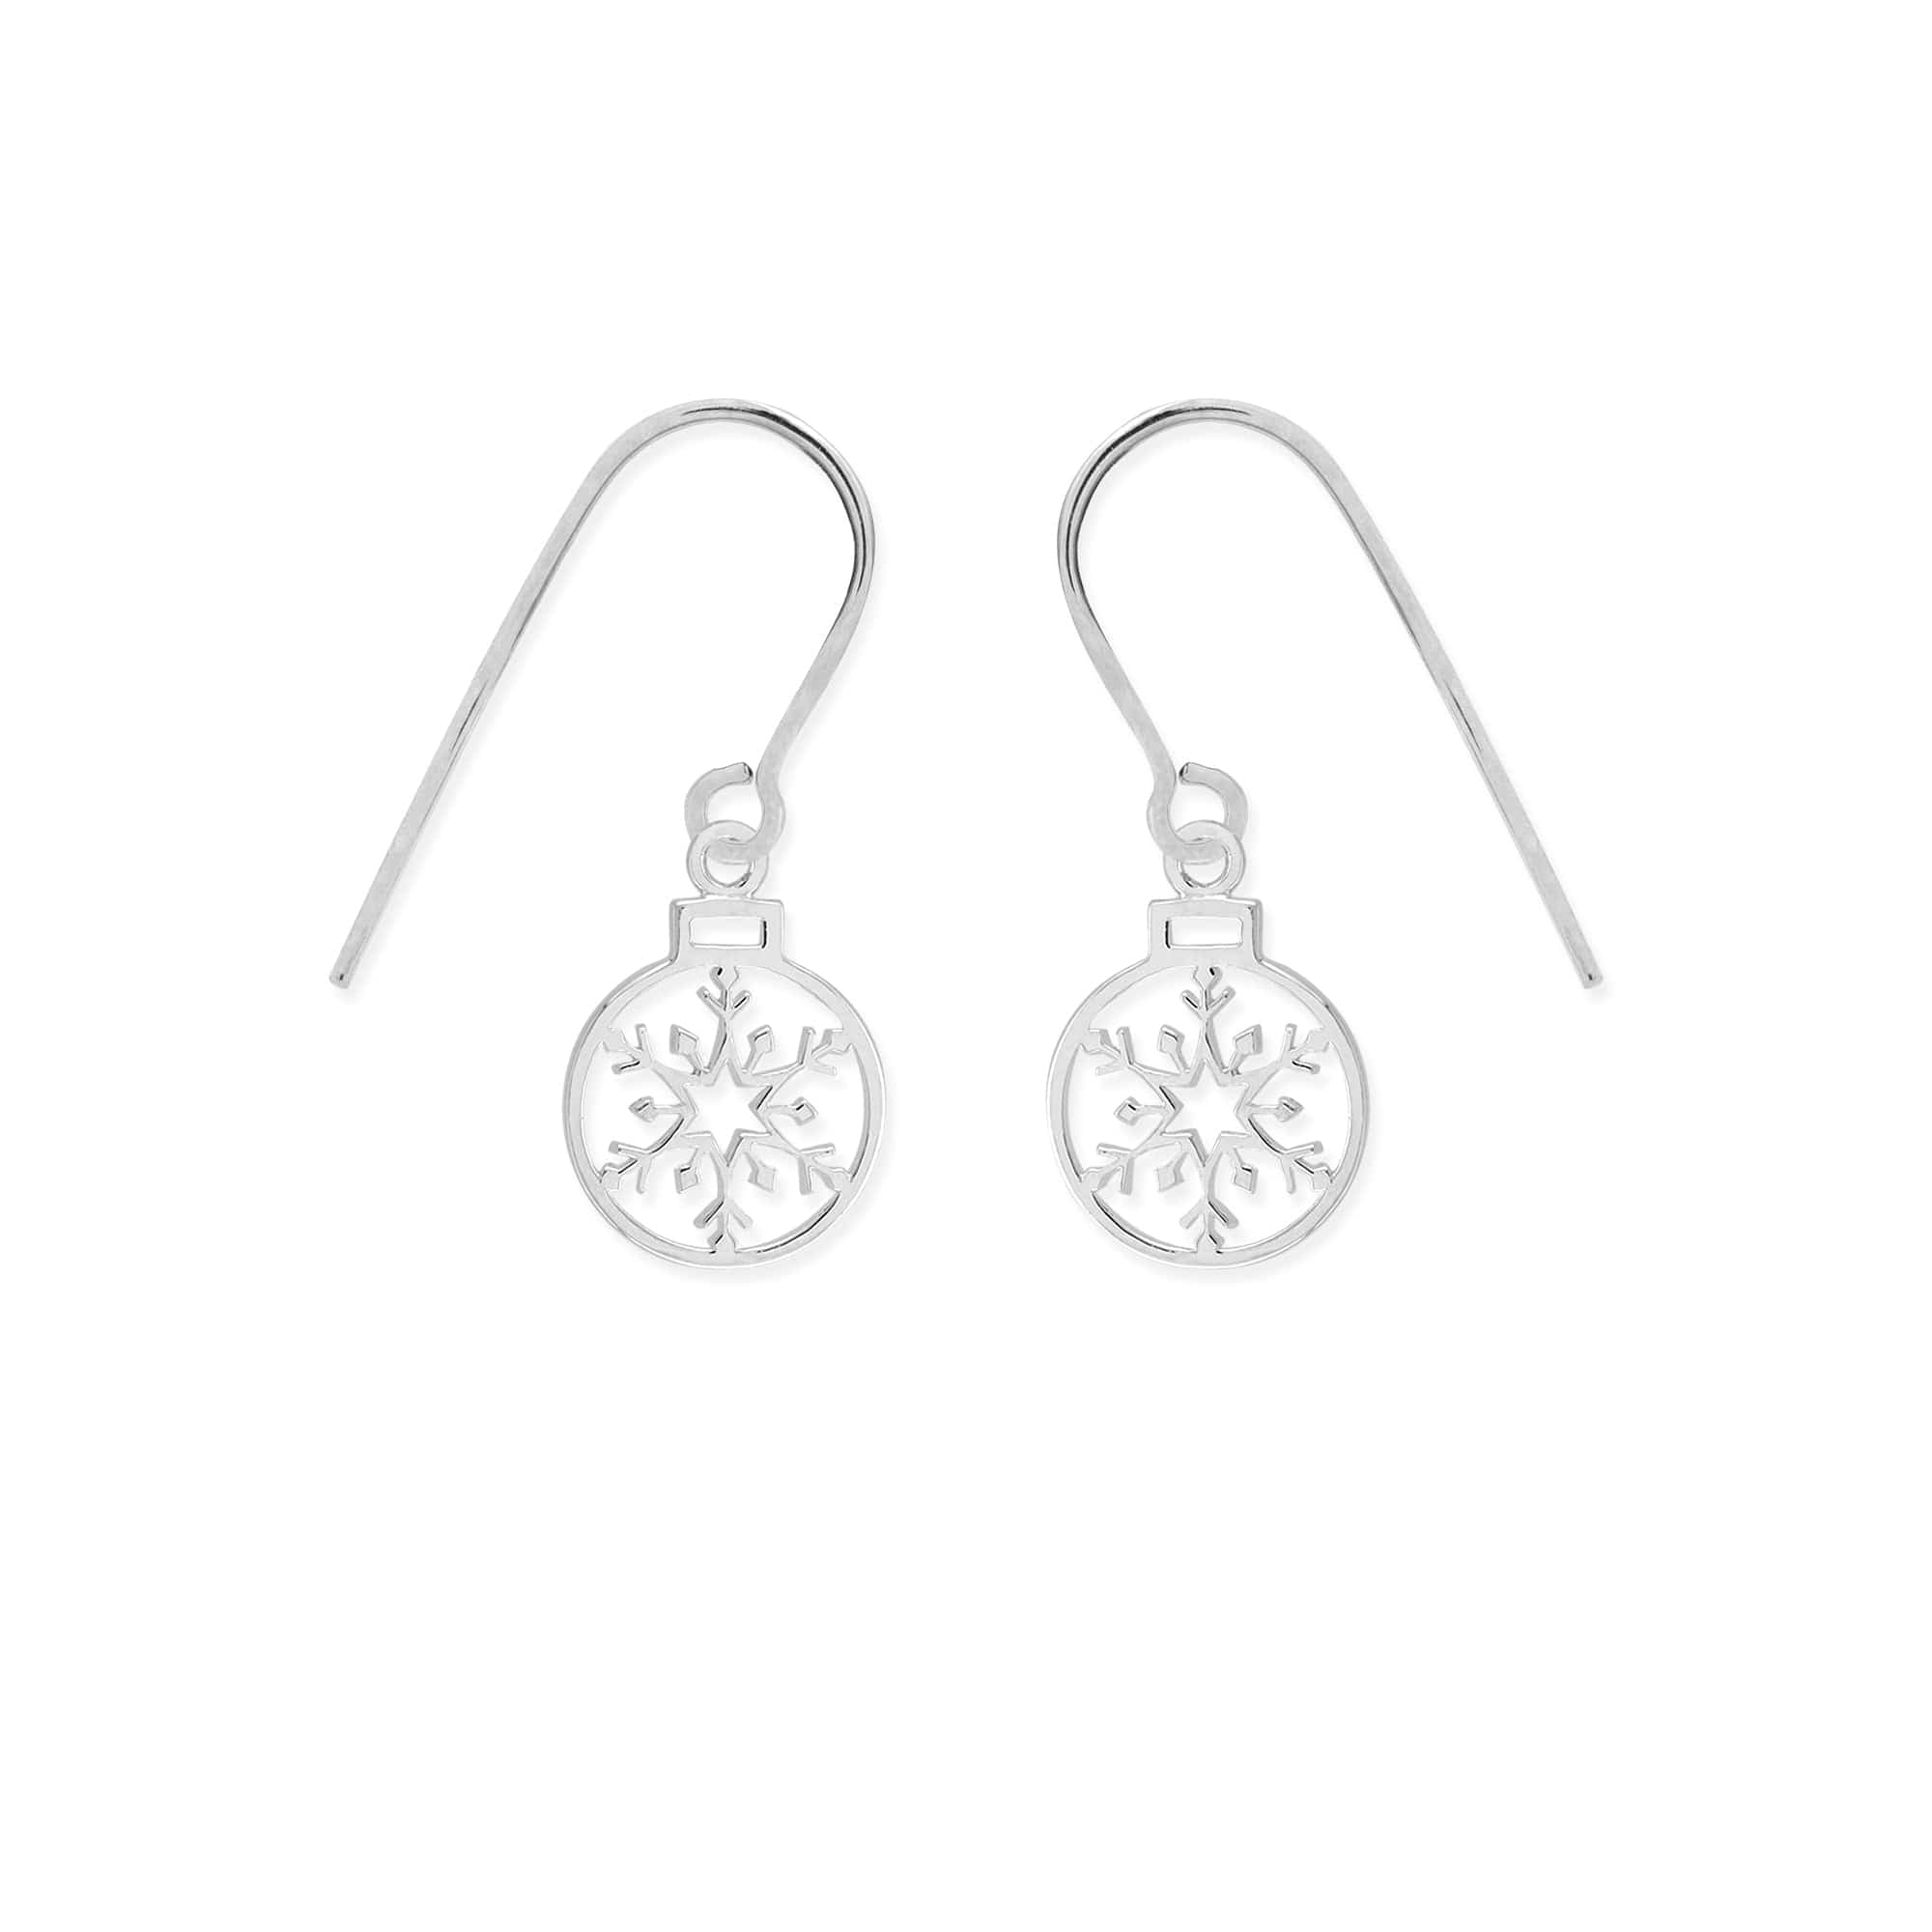 Boma Jewelry Earrings Christmas Ball Snowflakes Earrings